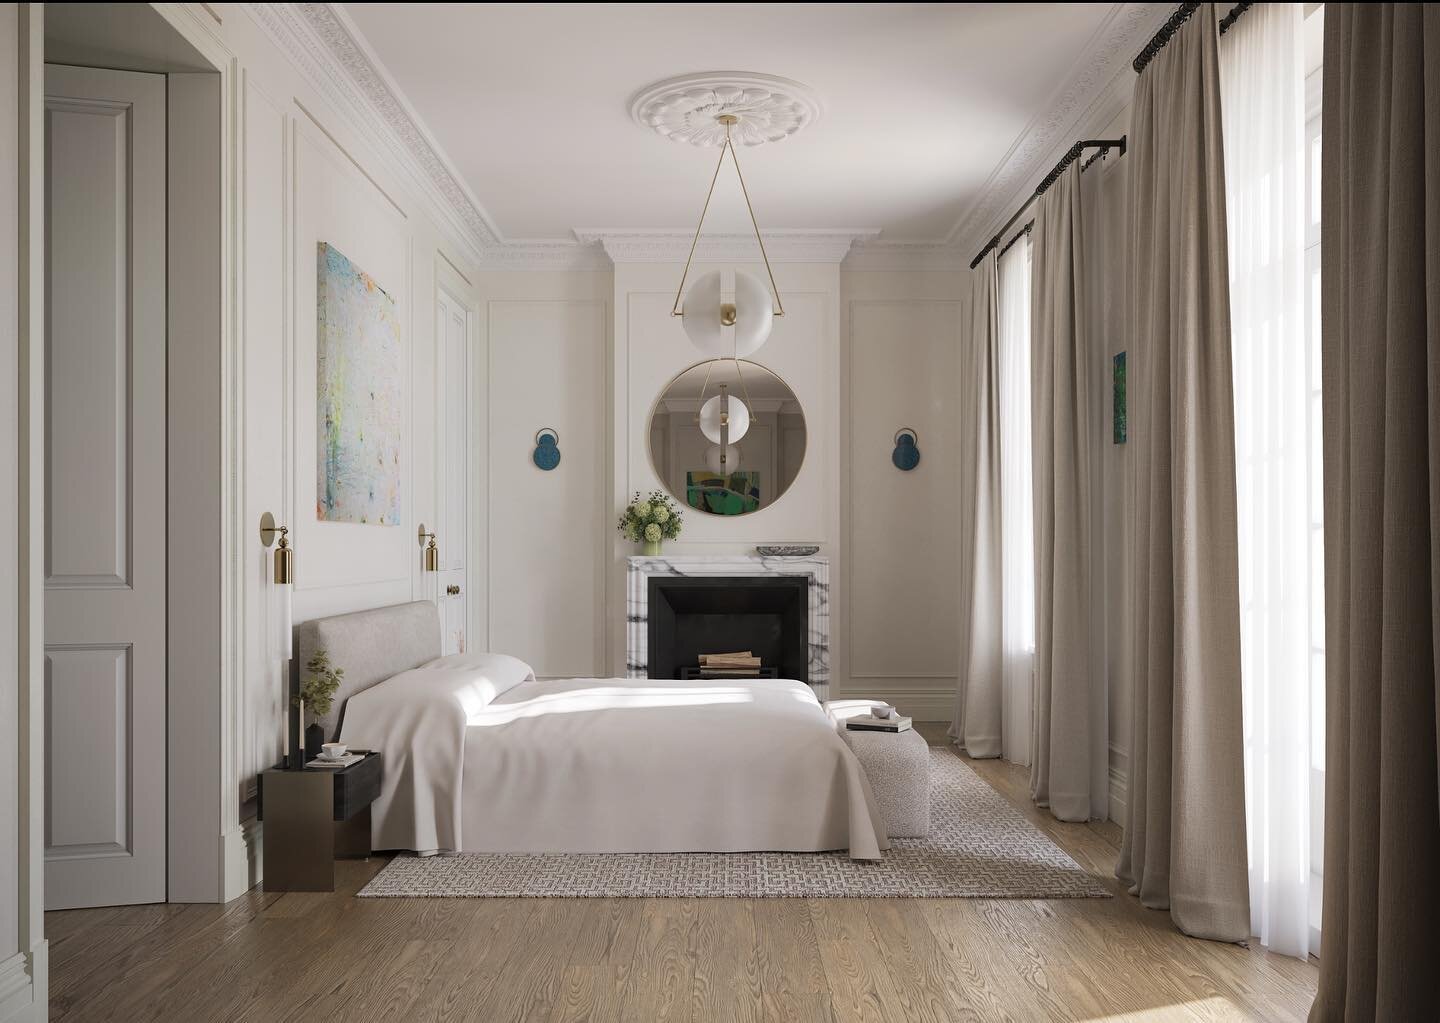 Unveiling the principle bedroom we have designed for this elegant Notting Hill home alongside architects @nashbakerarchi @louiseholtdesign #interiordesign #interiorarchitecture #londoninteriors #luxurylifestyle @nara_studios